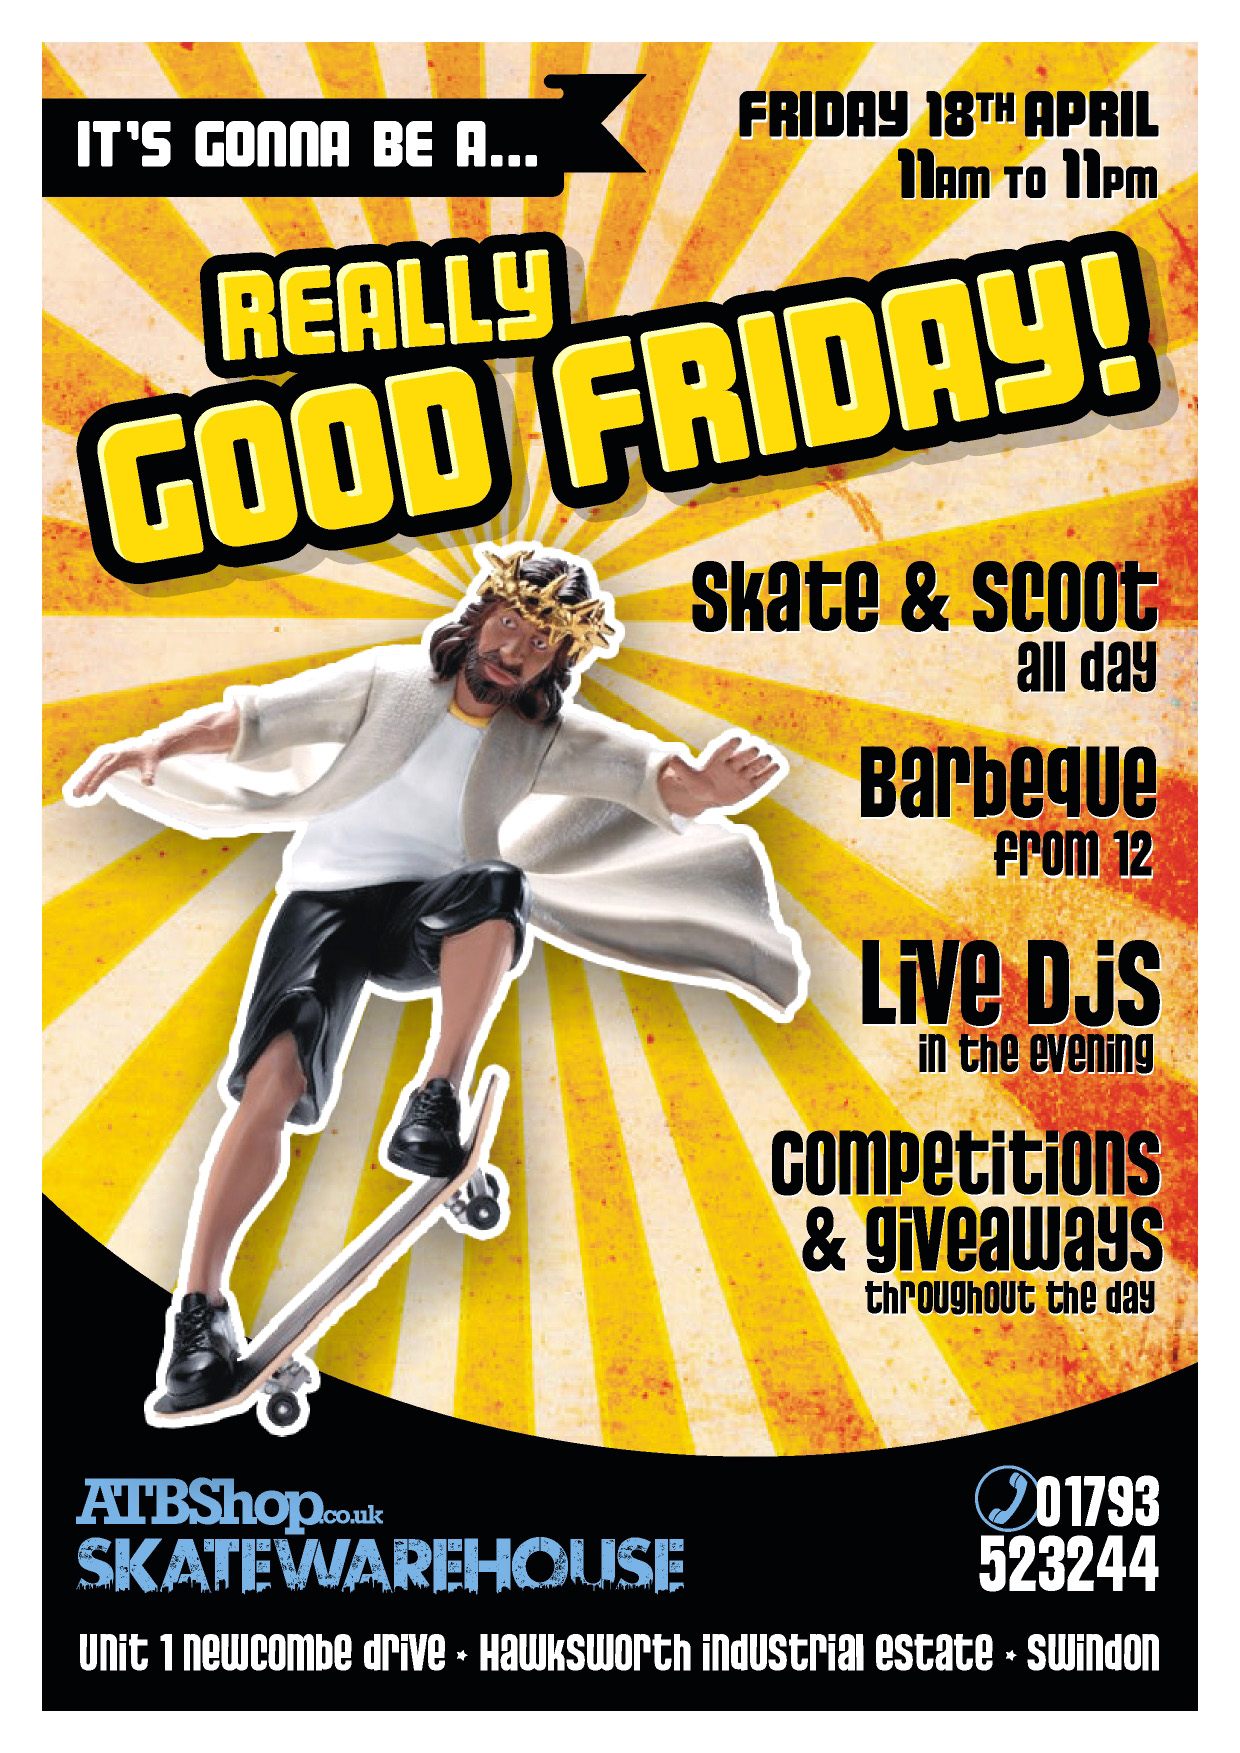 Really Good Friday Event at ATBShop Skate Warehouse